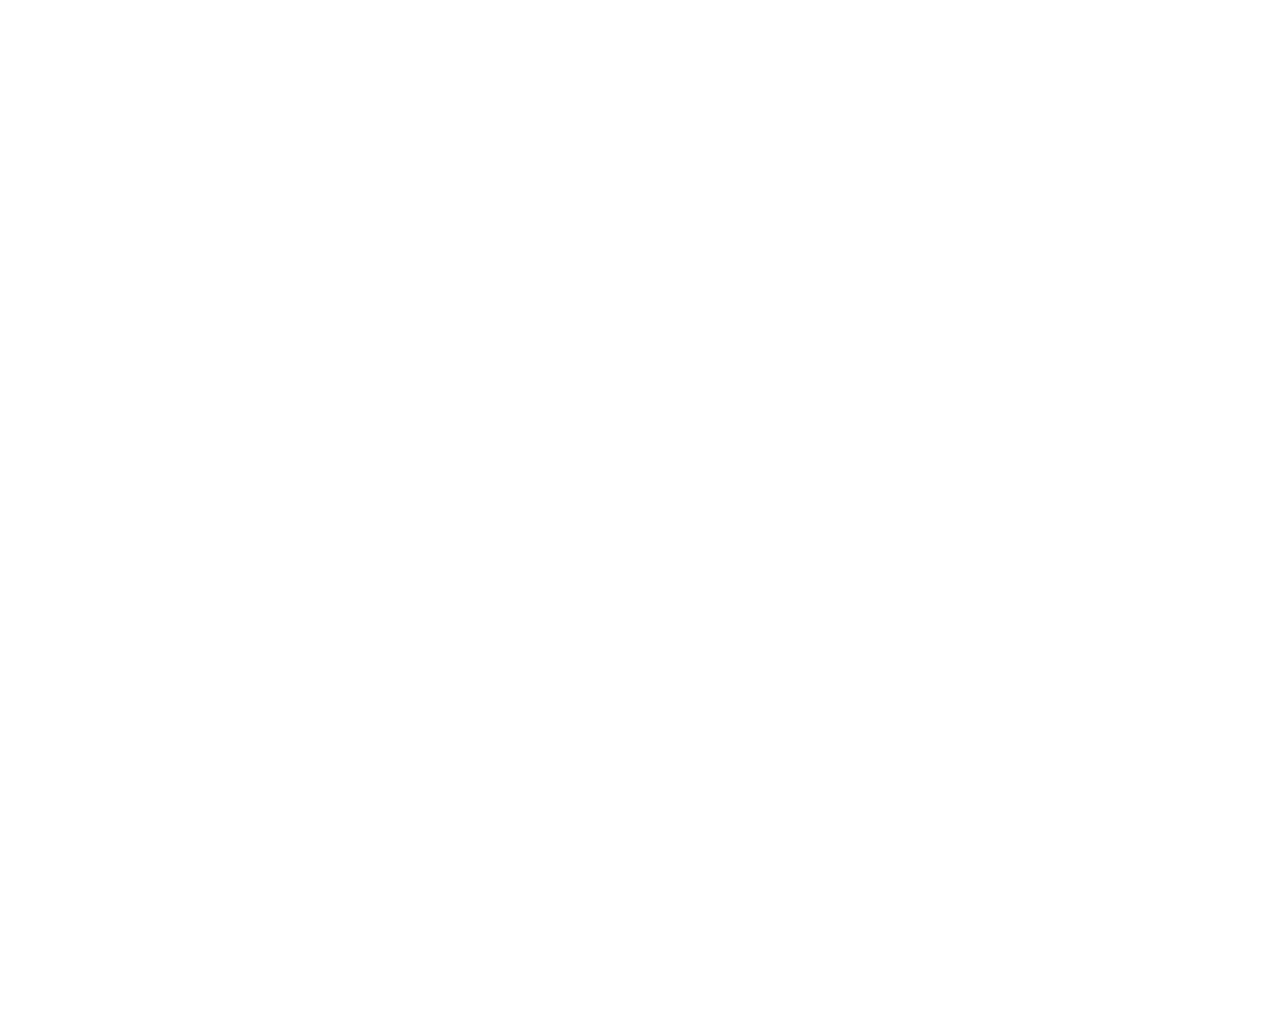 Get Outdoors Washington's logo